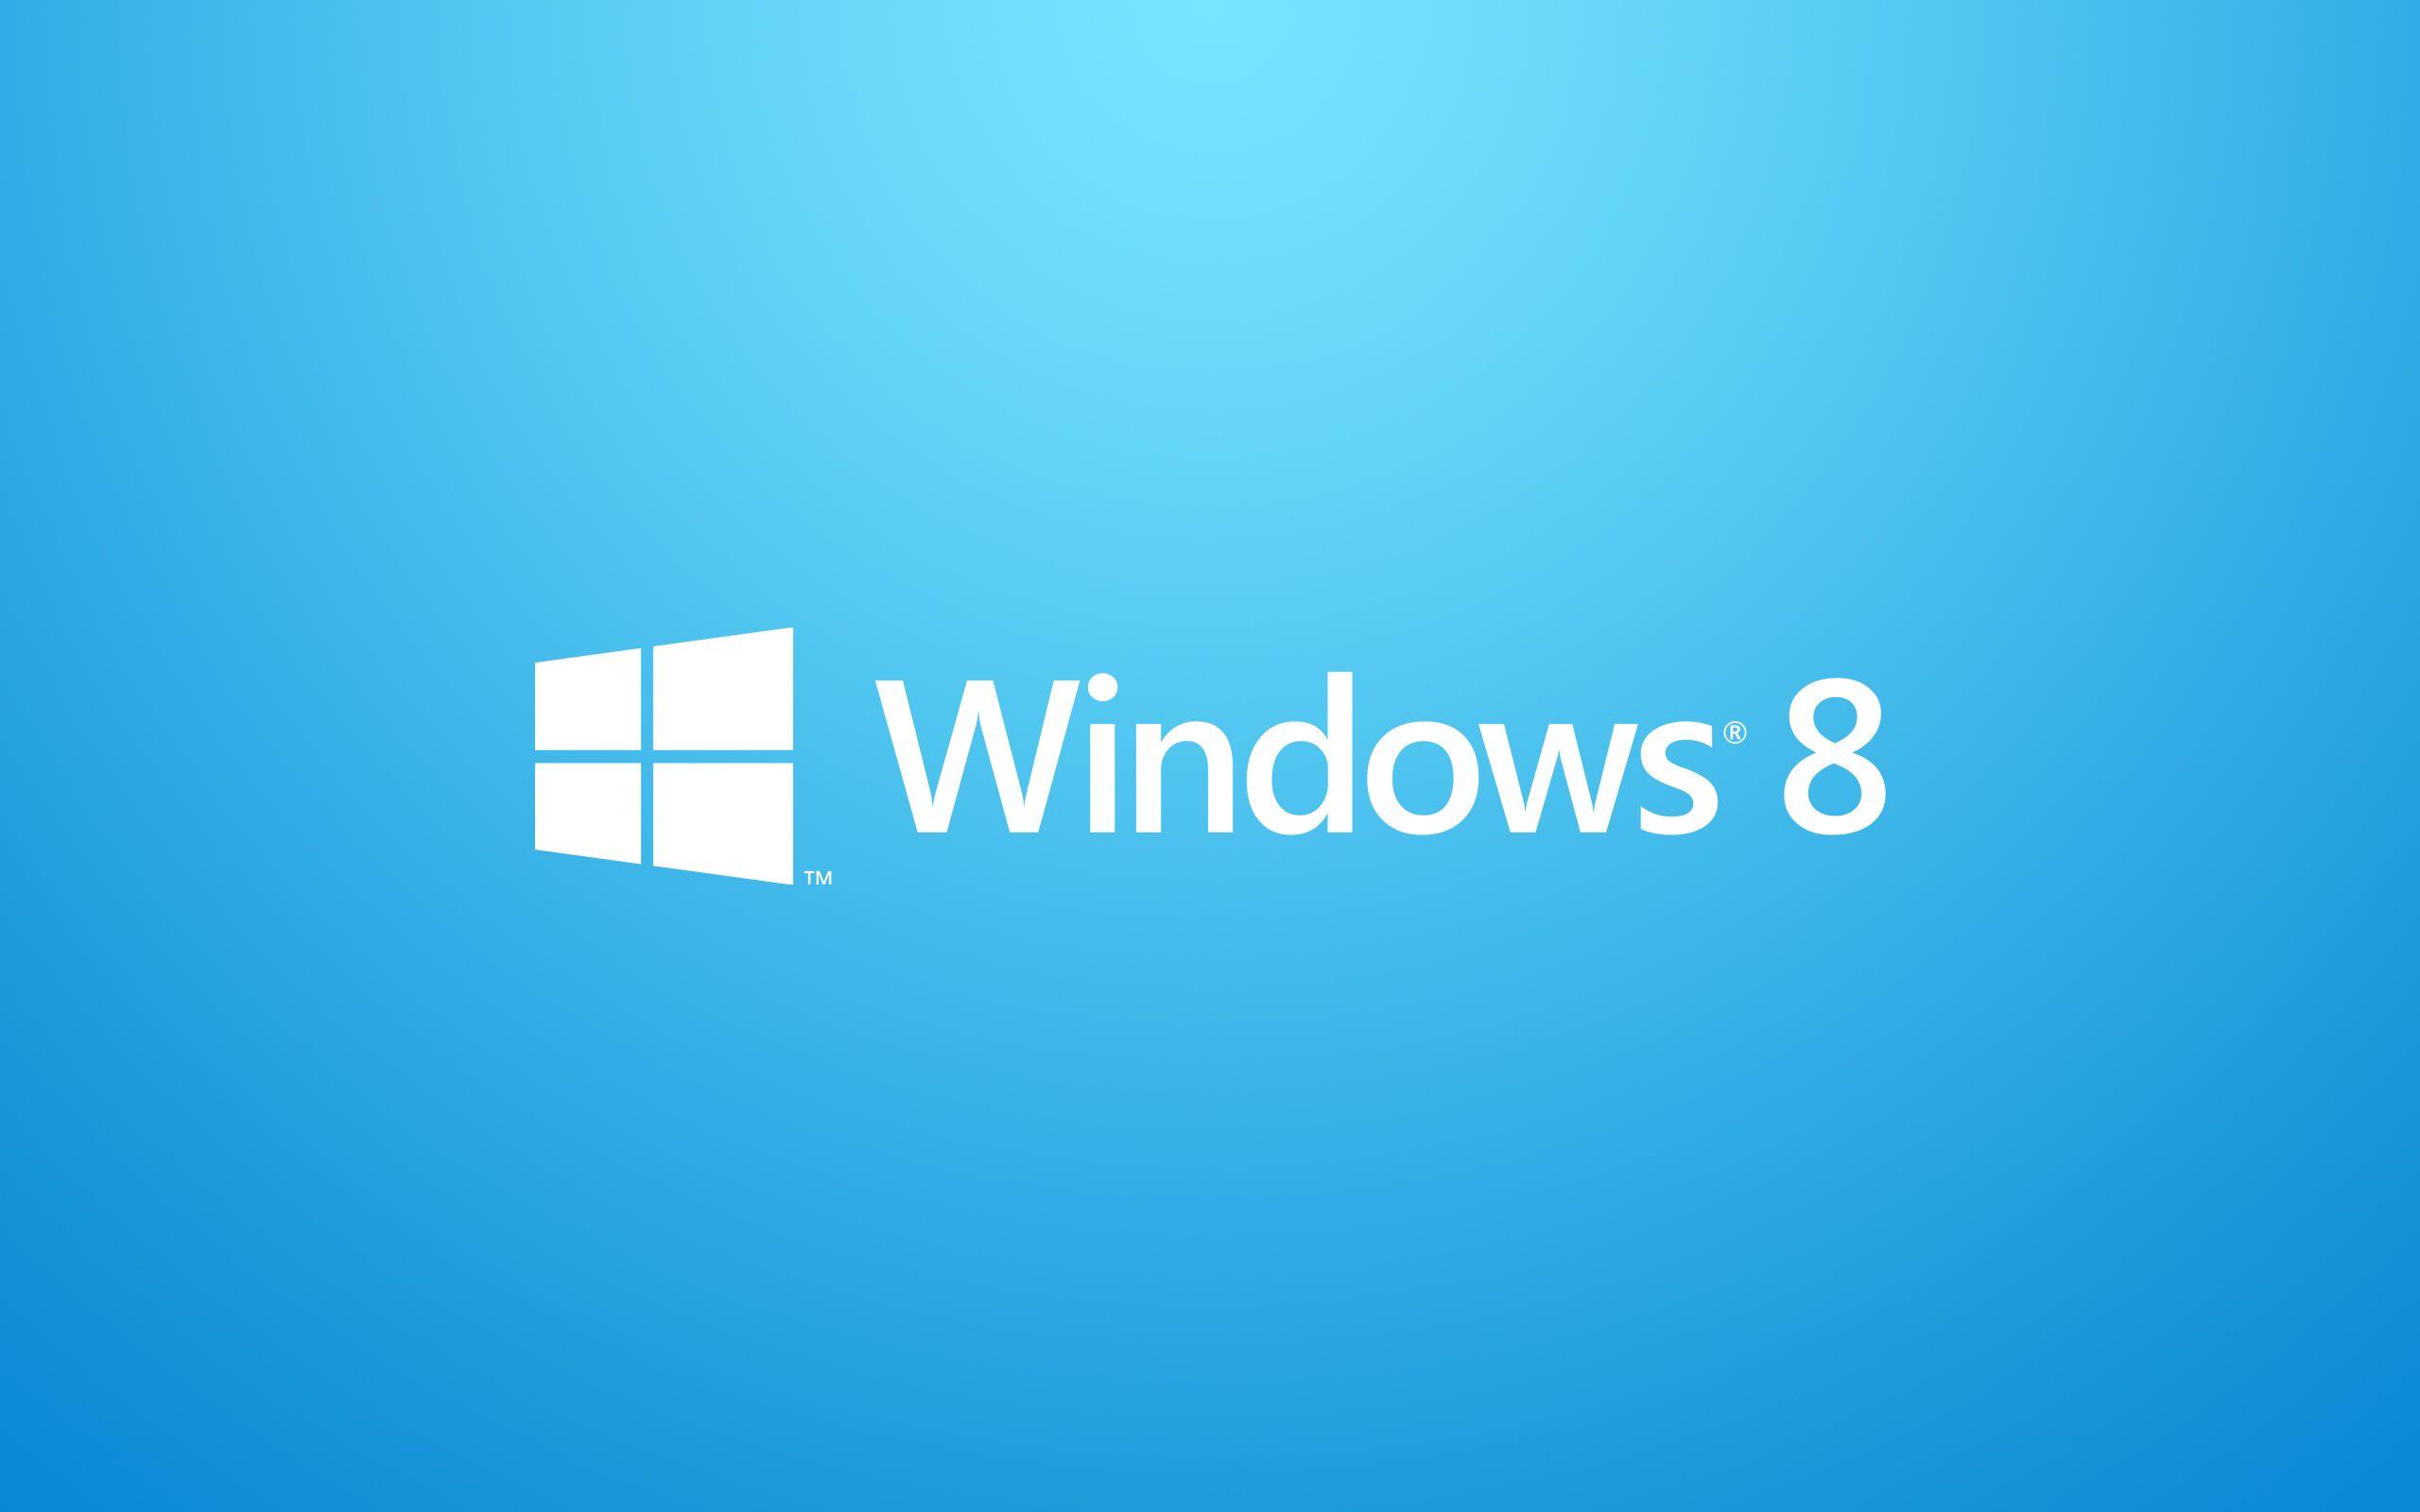 Windows 8 HD Wallpaper 1920x1080p wallpaper download